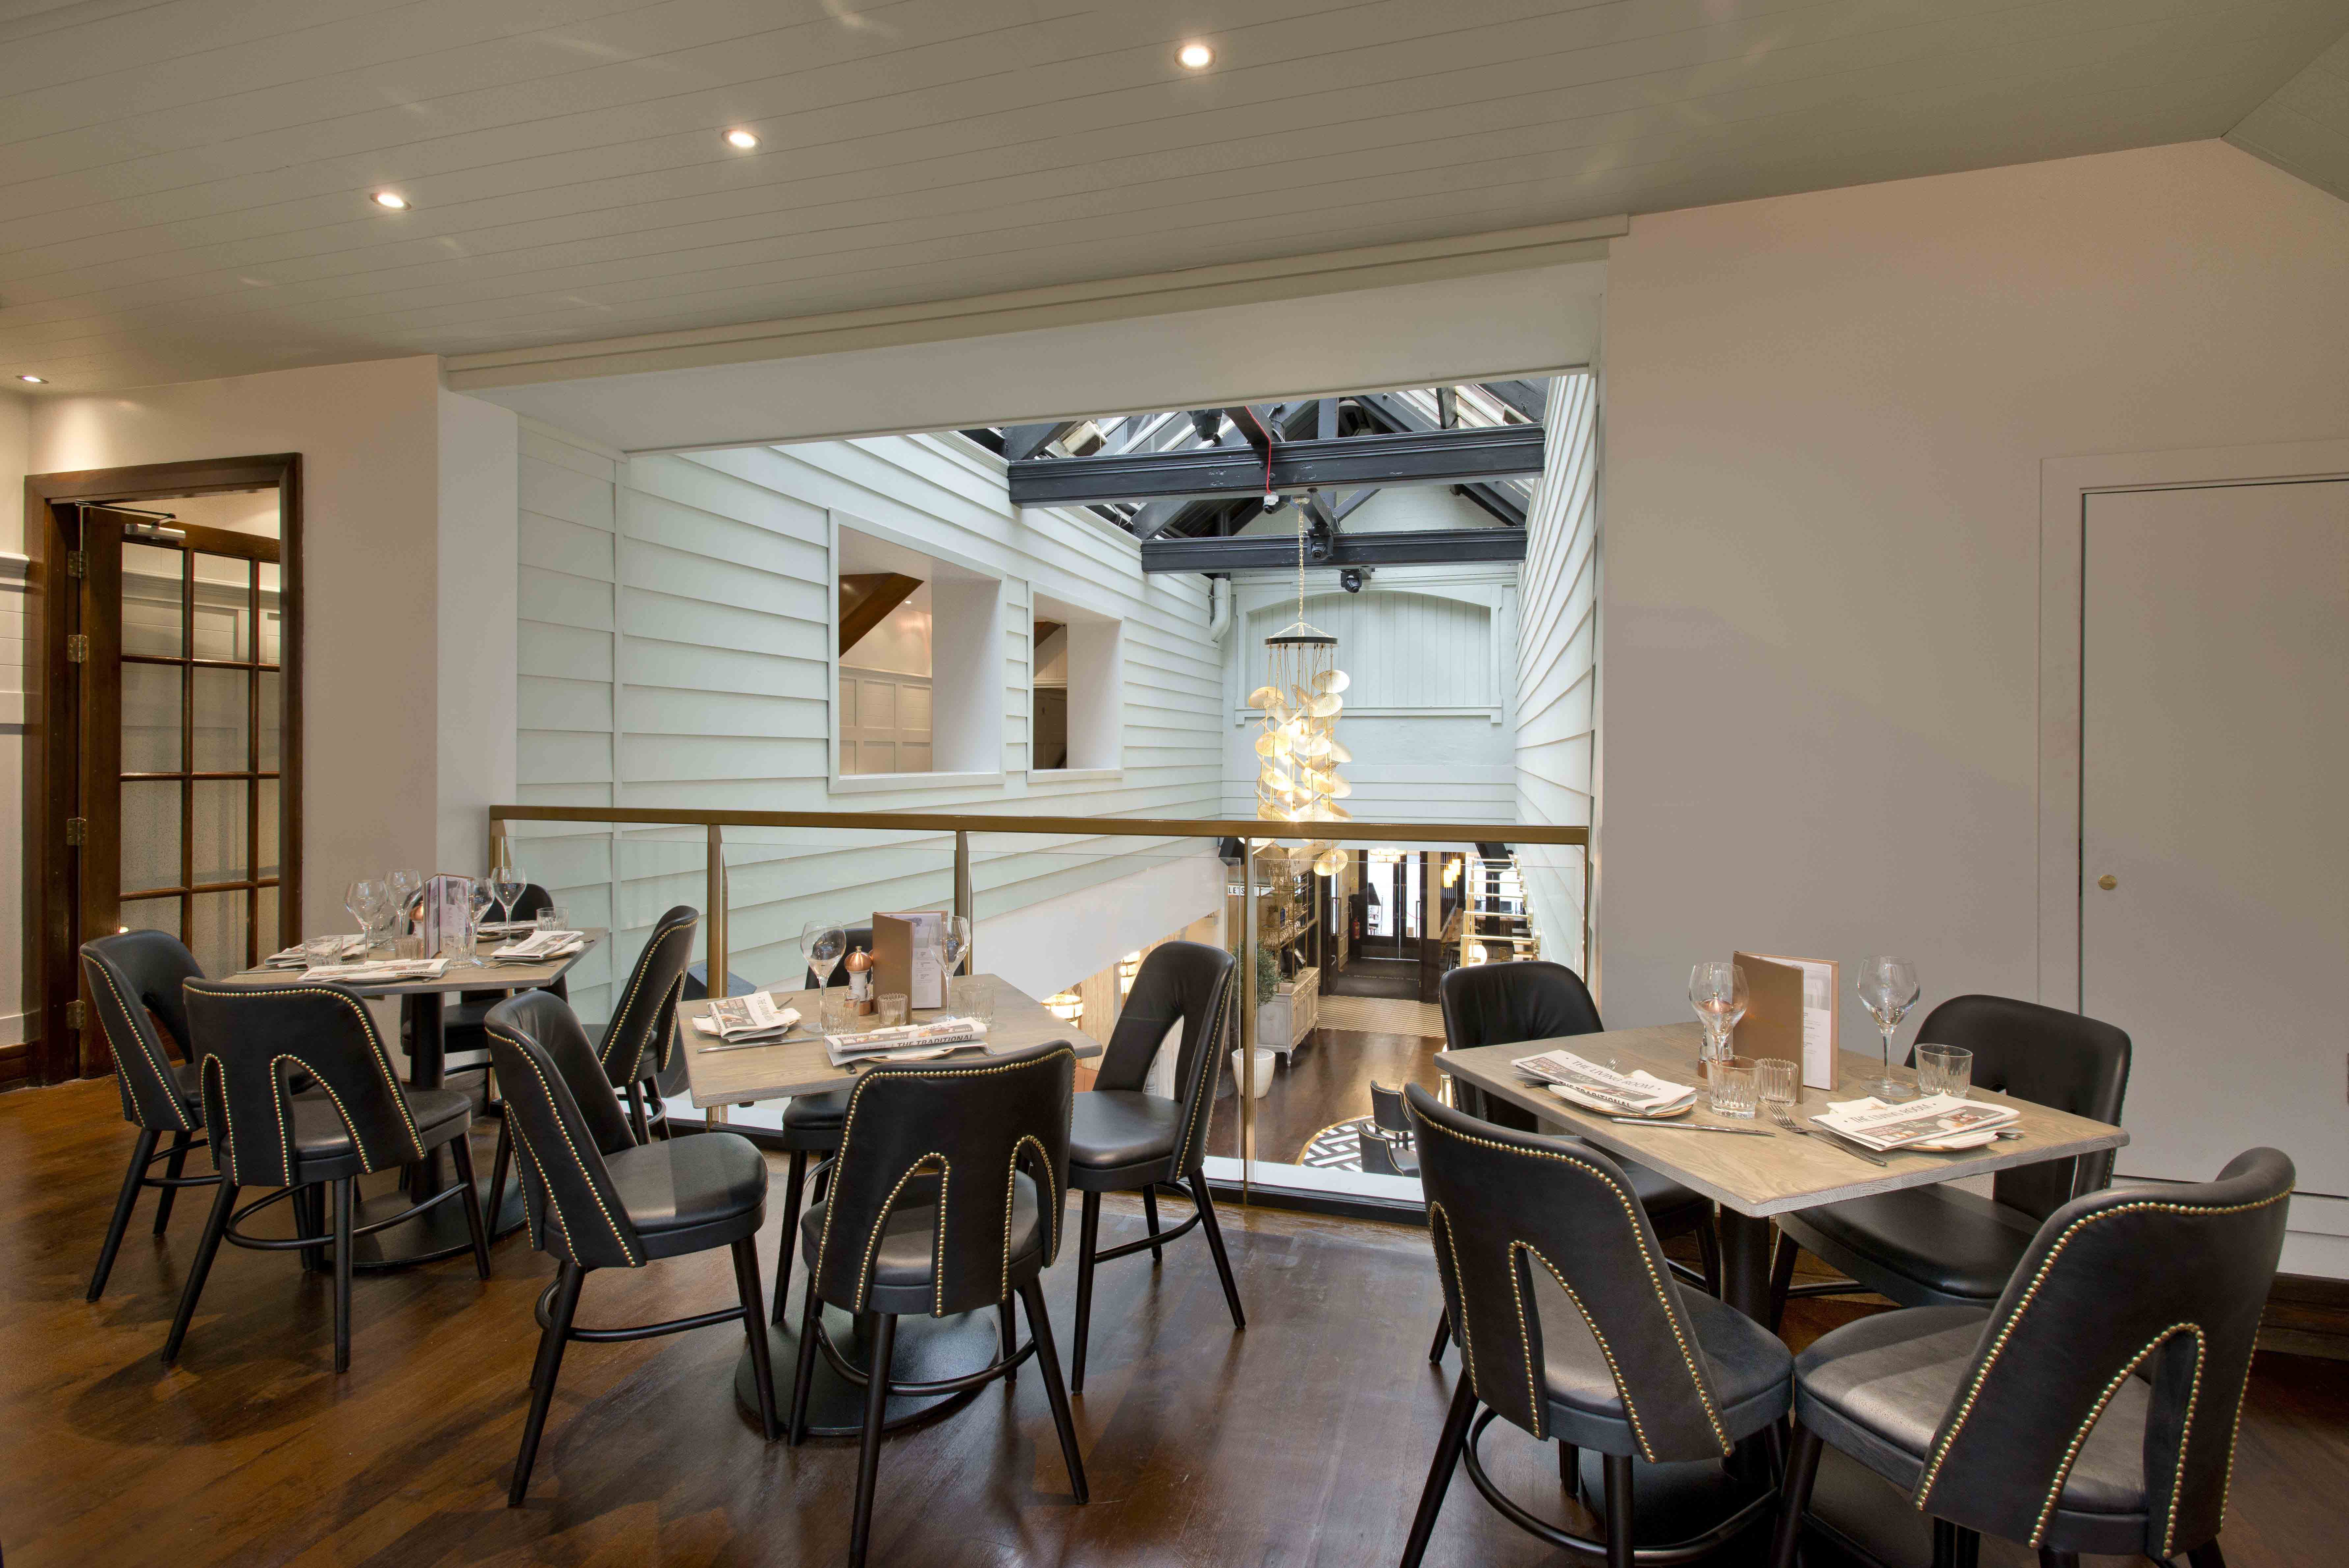 Fusion by Design's interior design scheme for Manchester based restaurant